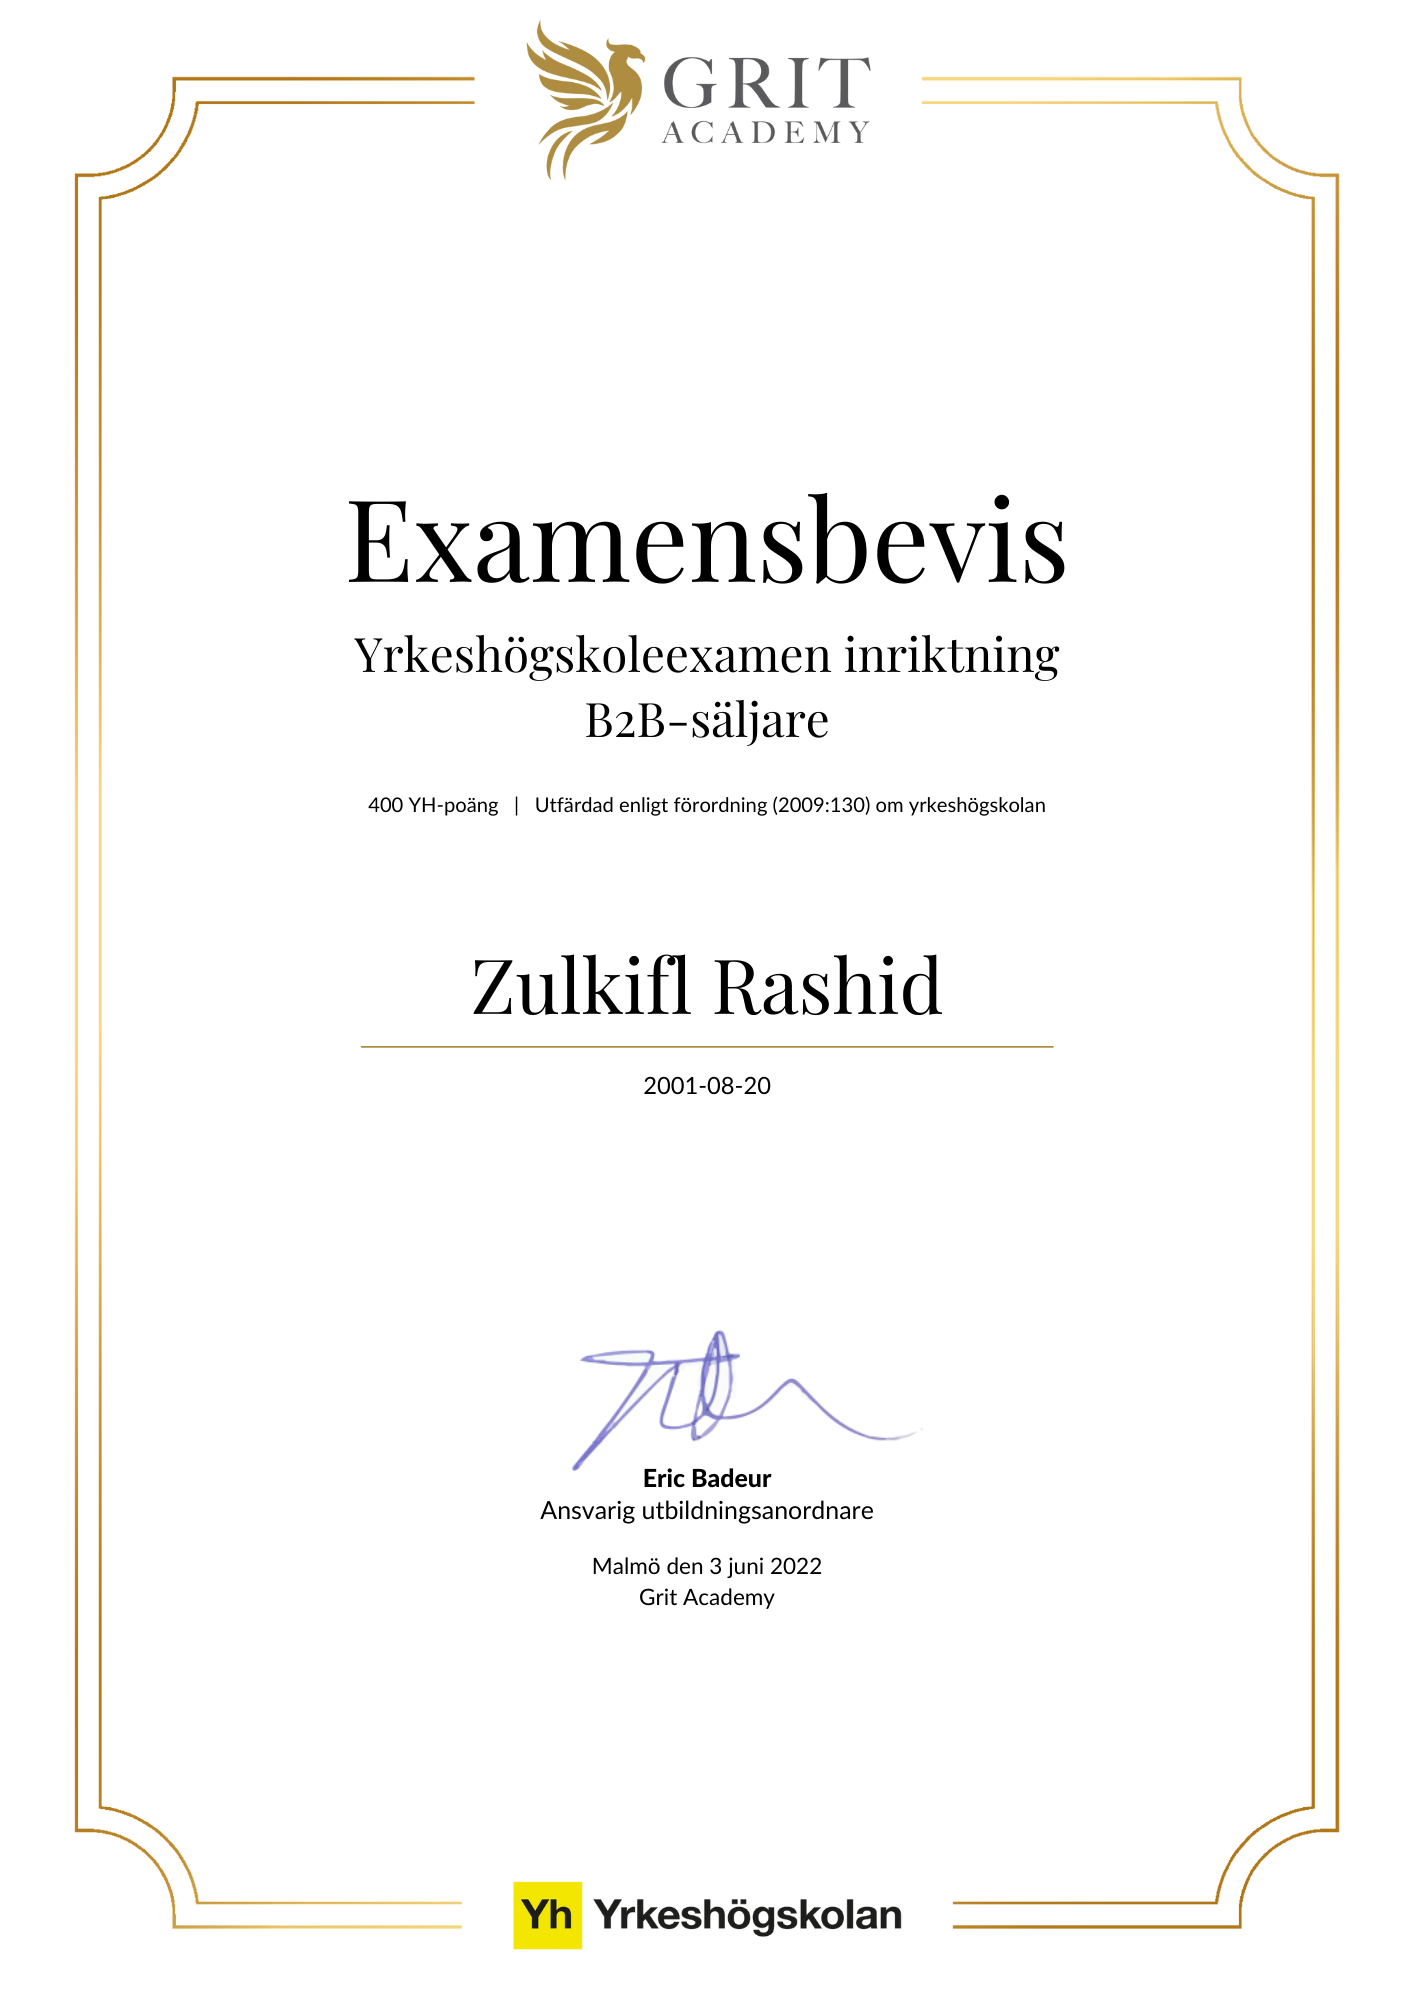 Examensbevis Zulkifl Rashid